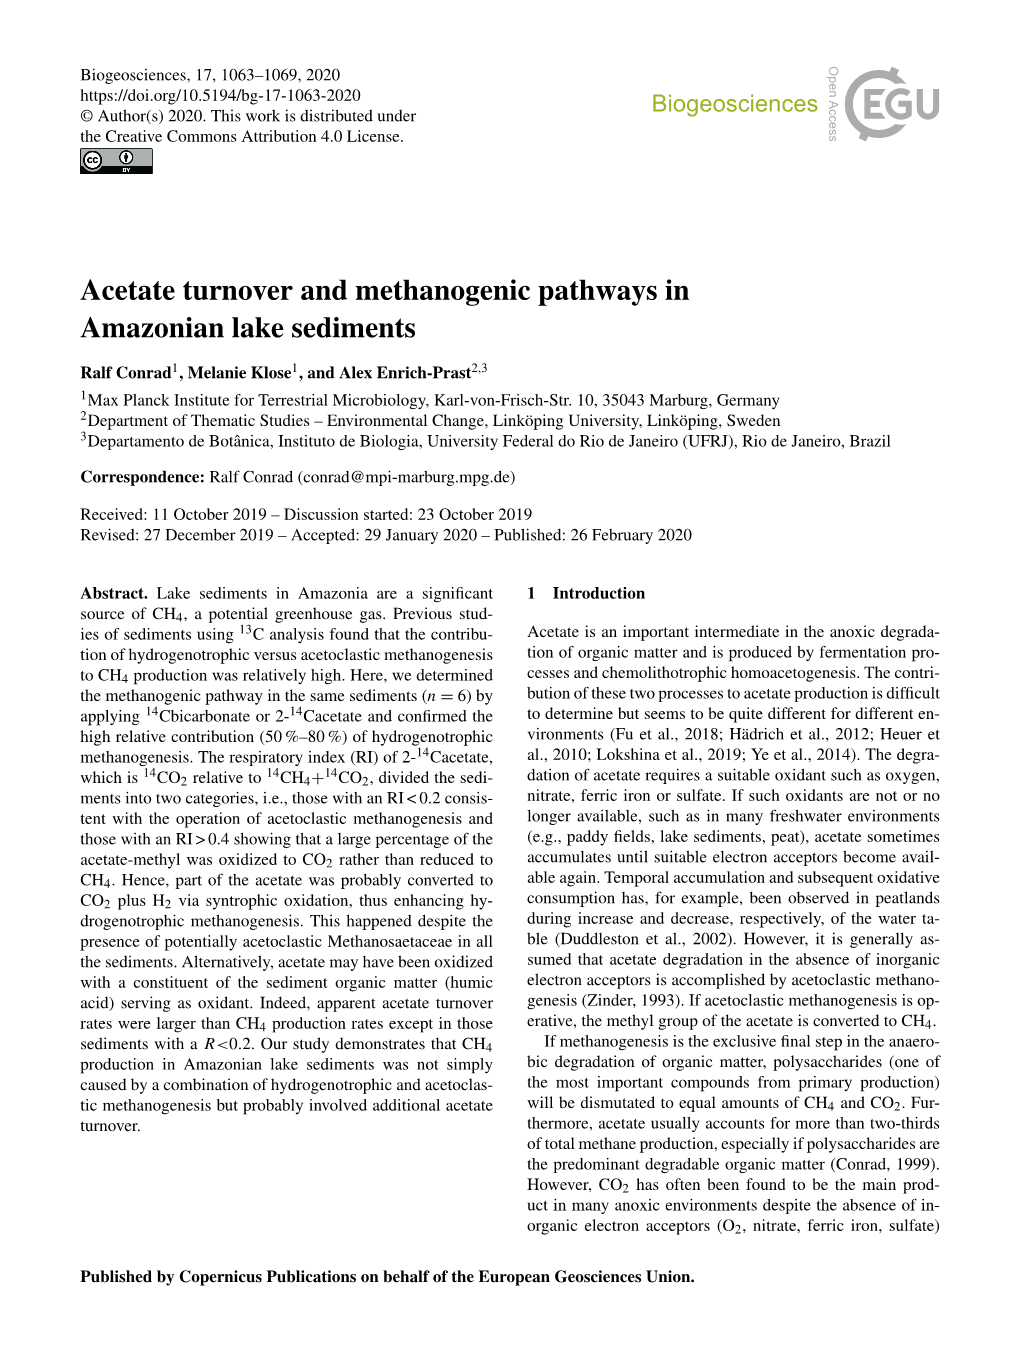 Acetate Turnover and Methanogenic Pathways in Amazonian Lake Sediments